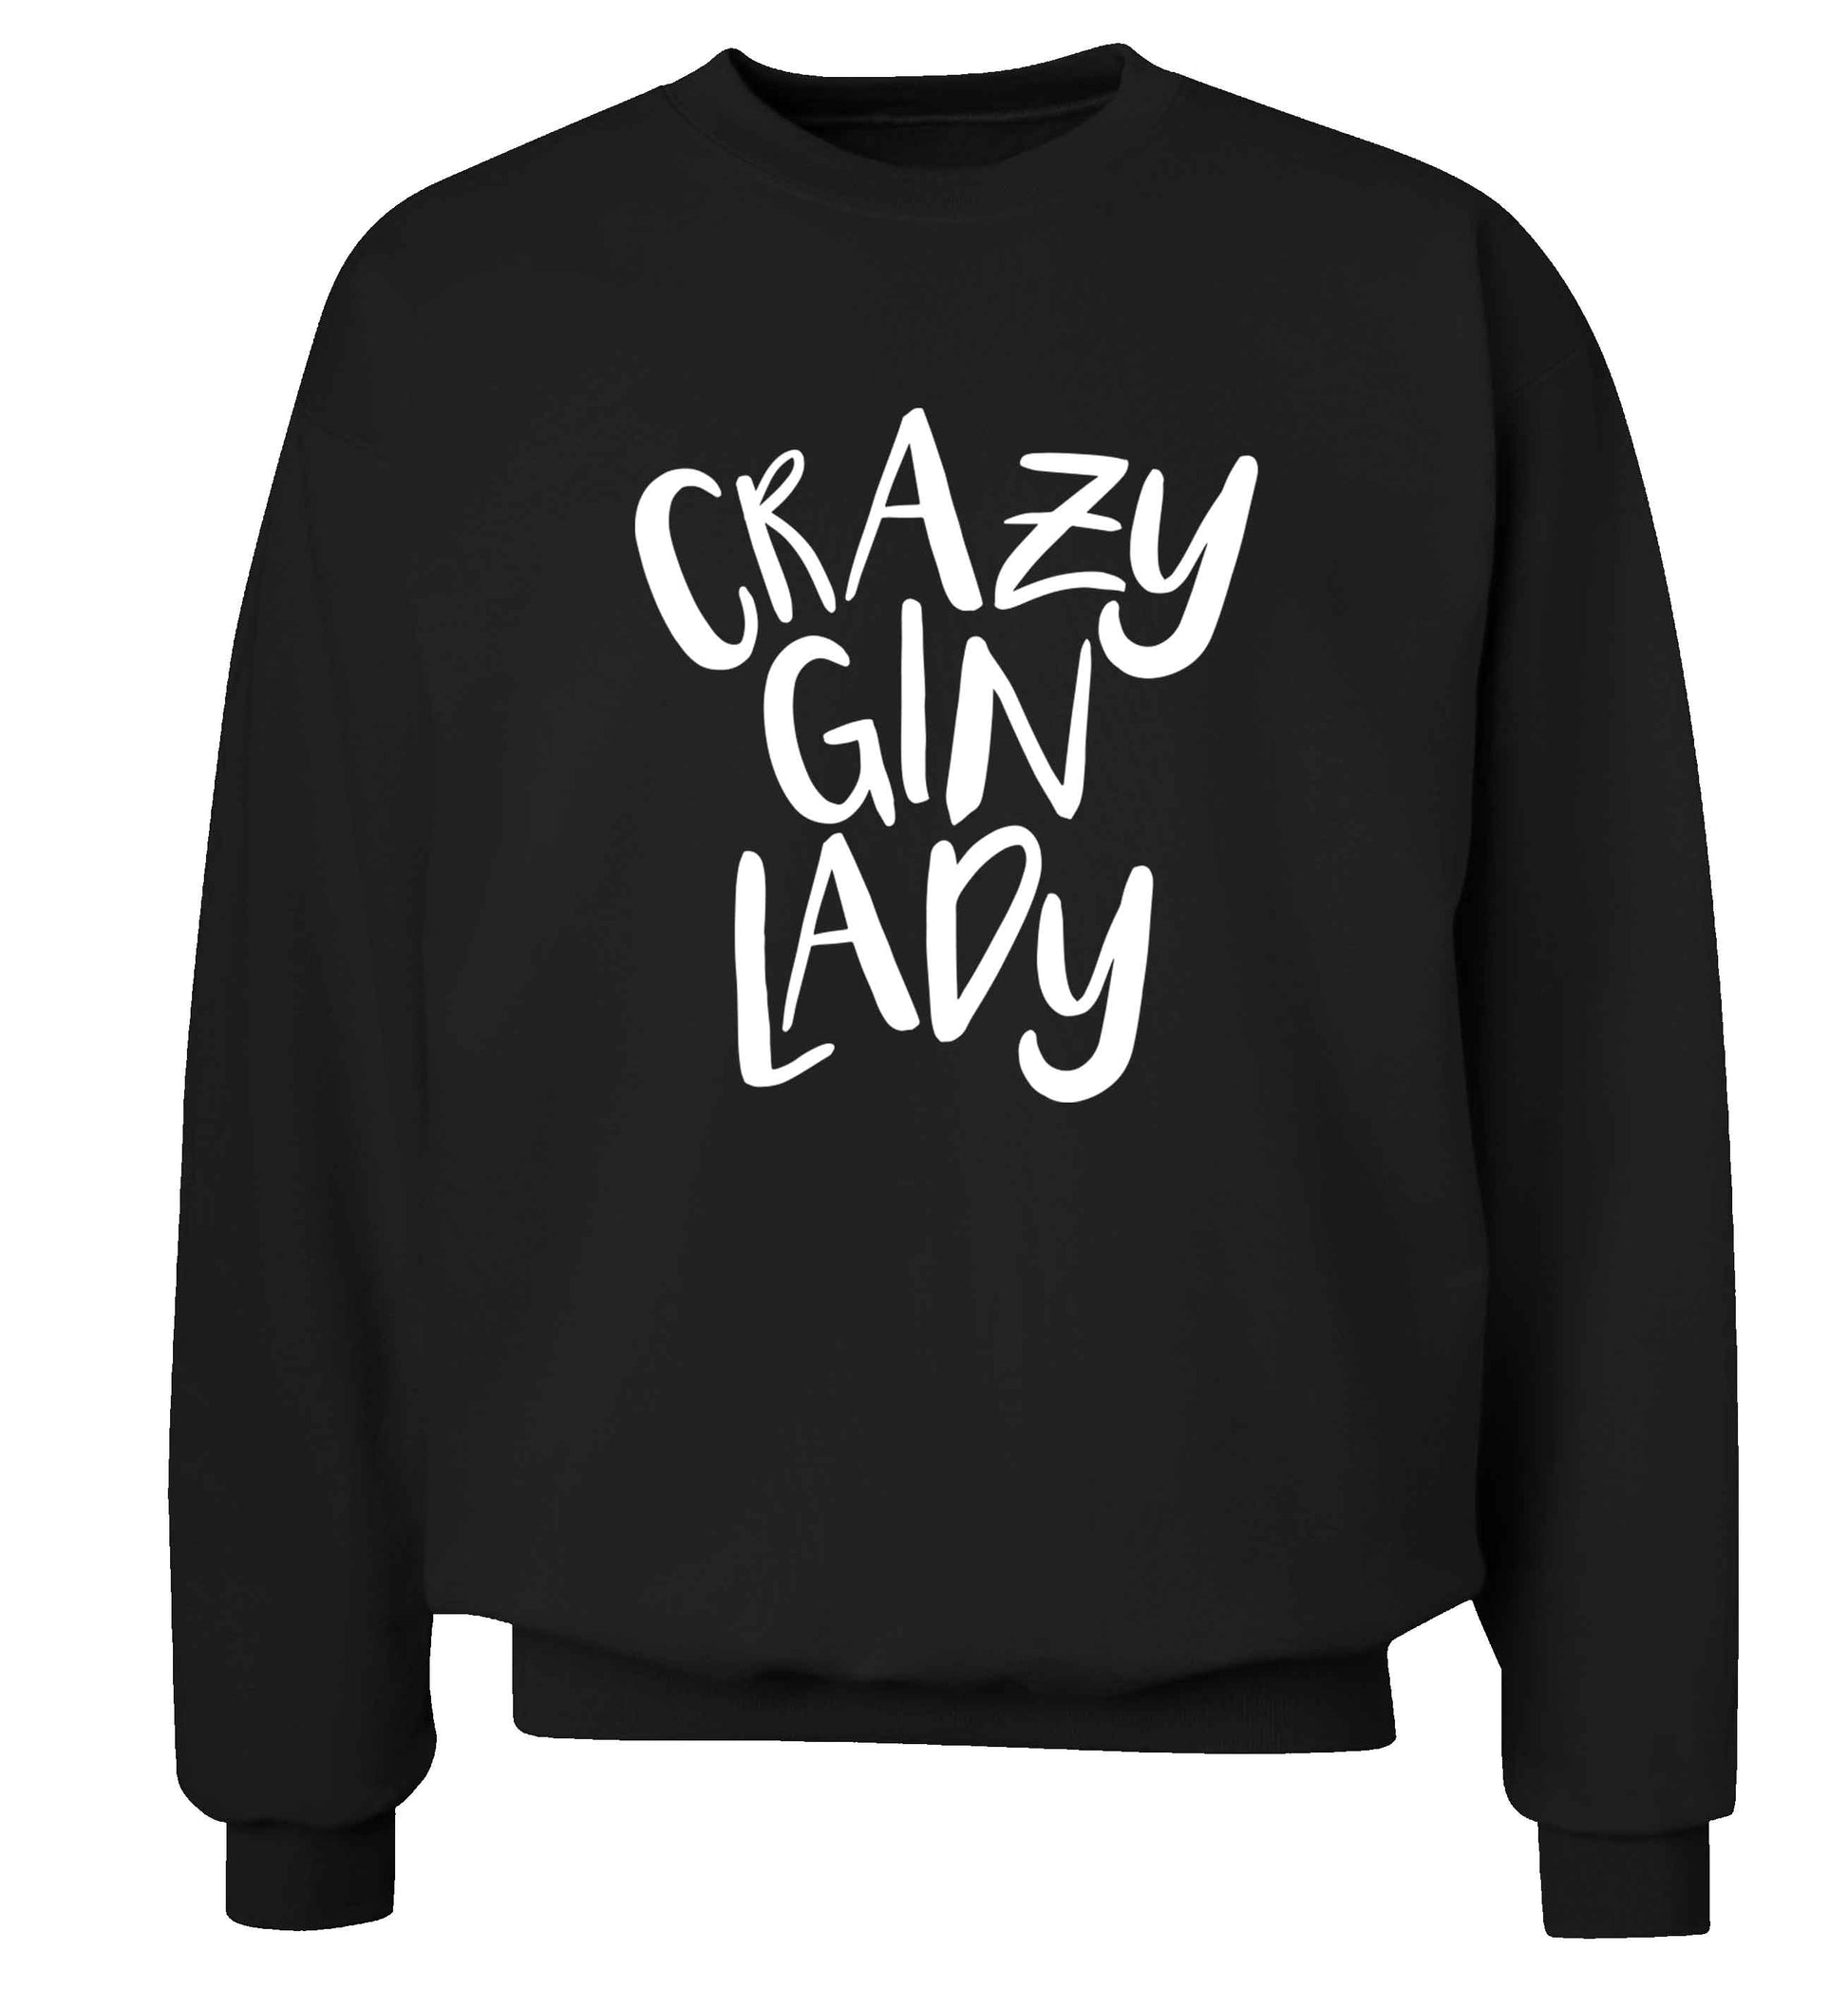 Crazy gin lady Adult's unisex black Sweater 2XL